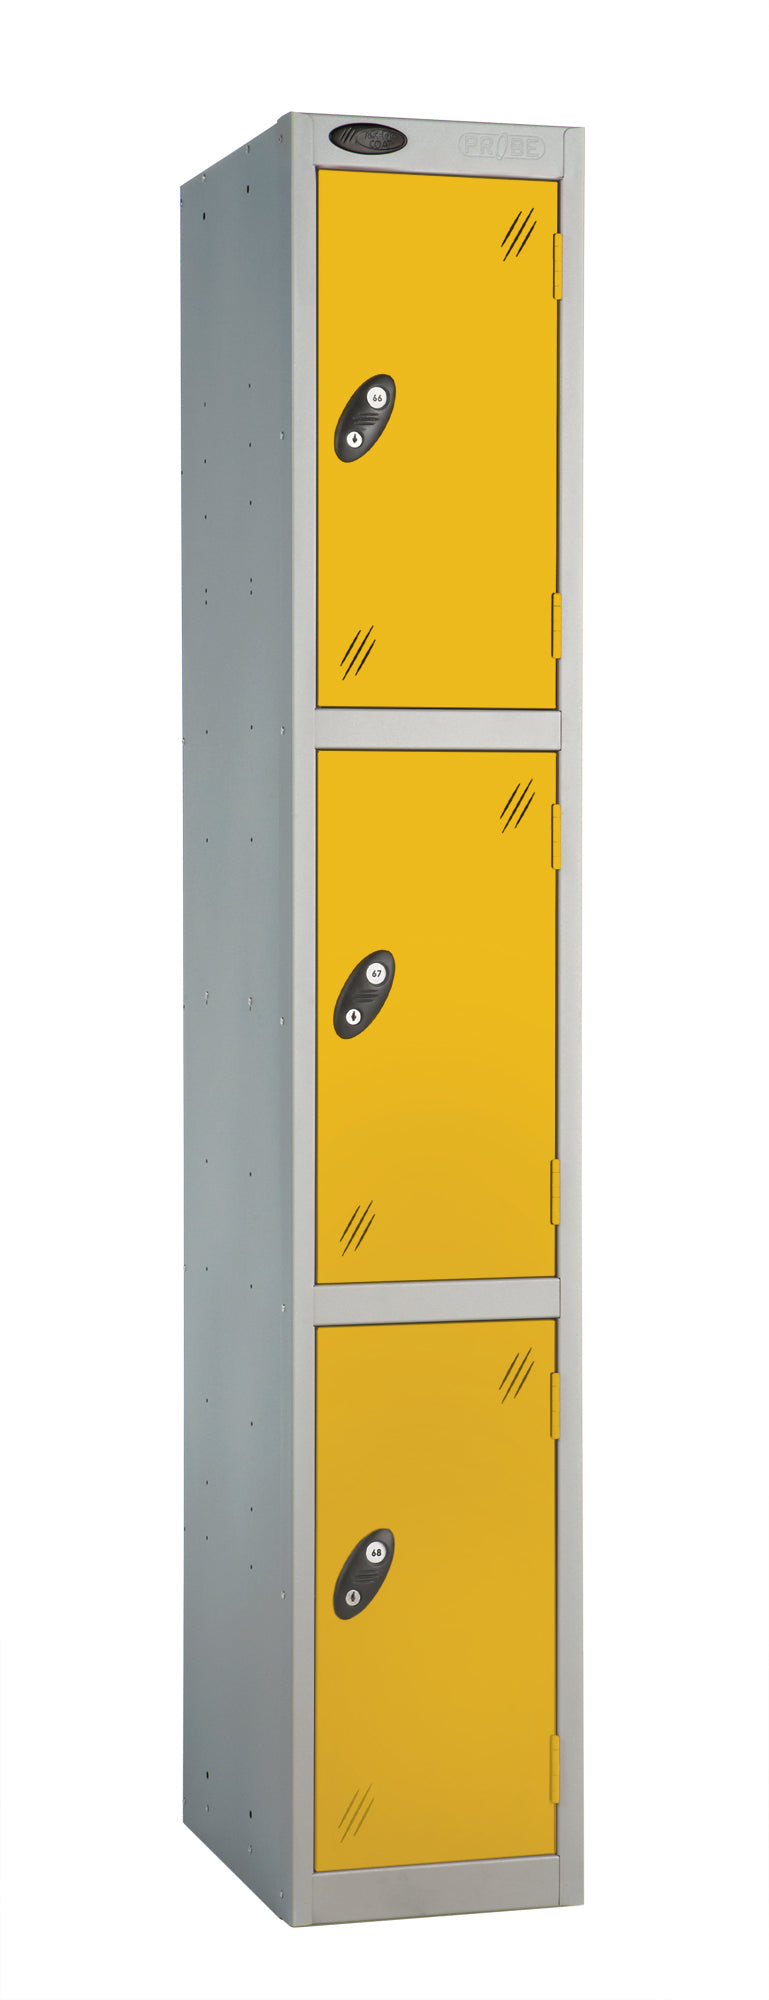 PROBEBOX STANDARD 1 NEST STEEL LOCKERS - ROYAL YELLOW 3 DOOR Storage Lockers > Lockers > Cabinets > Storage > Probe > One Stop For Safety   